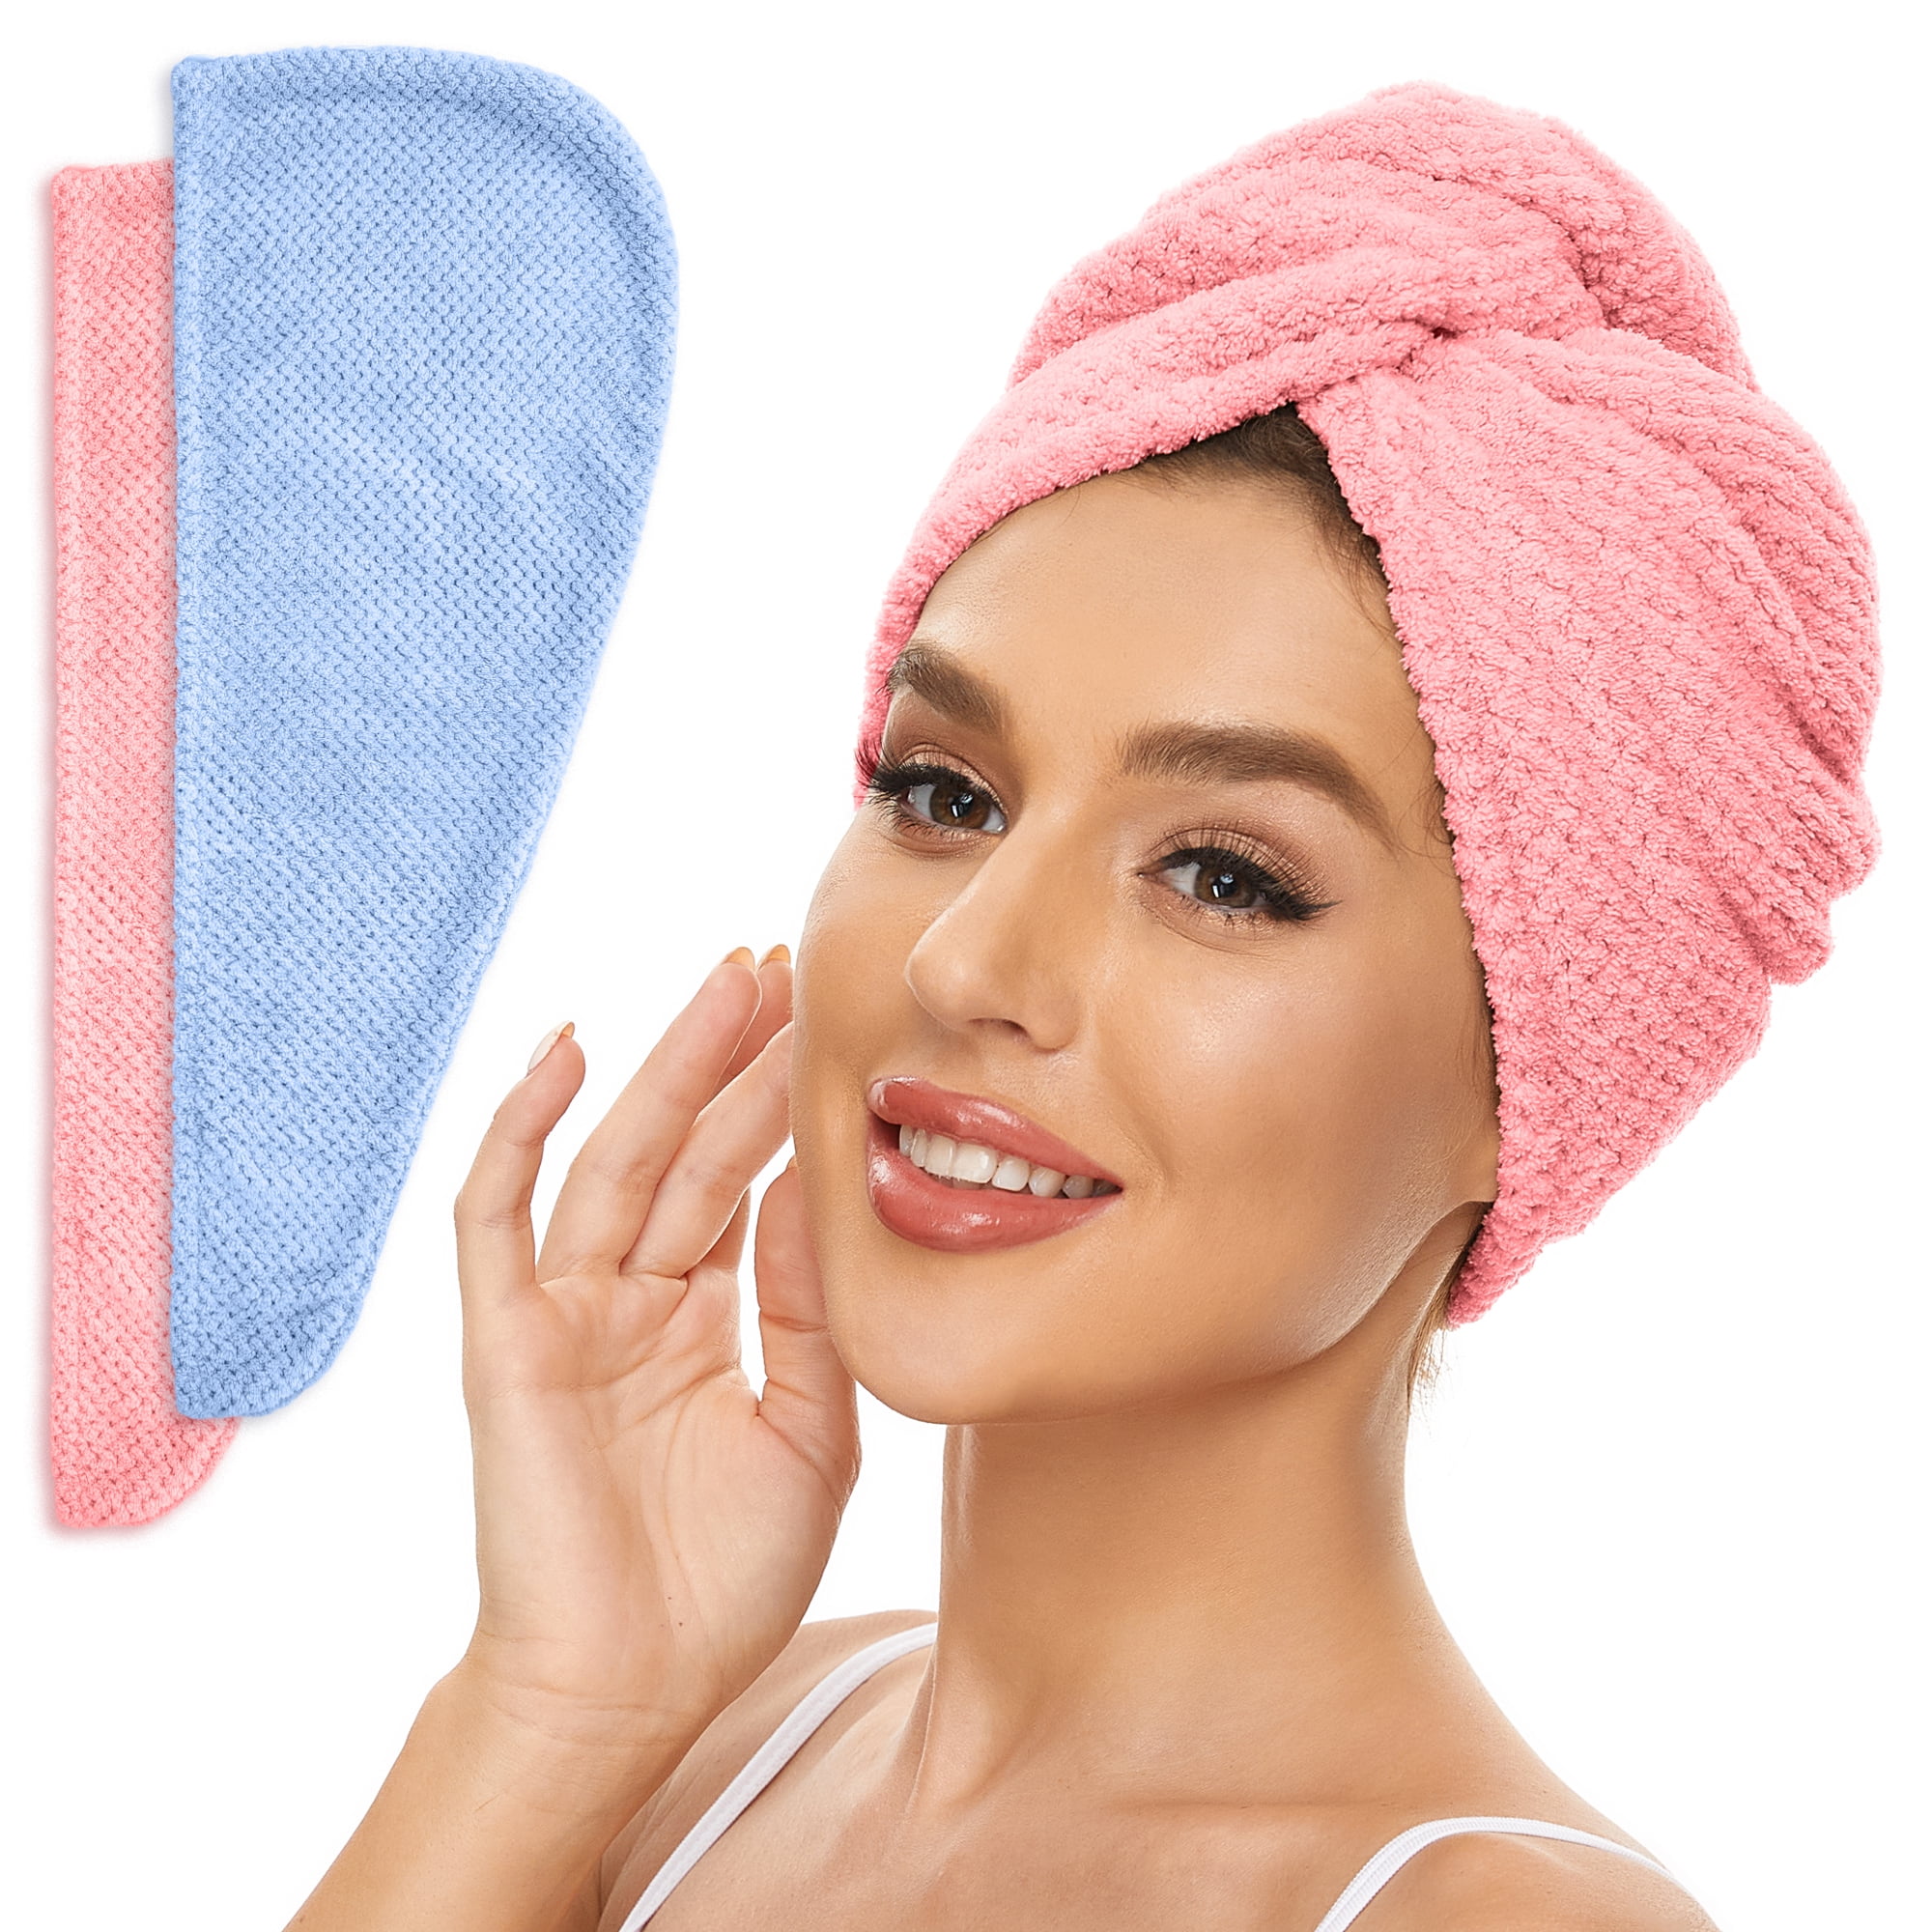 Hair Towel Wrap Microfiber Turban Twist Head Cap 23.6" x 9.8" Dry Shower US 